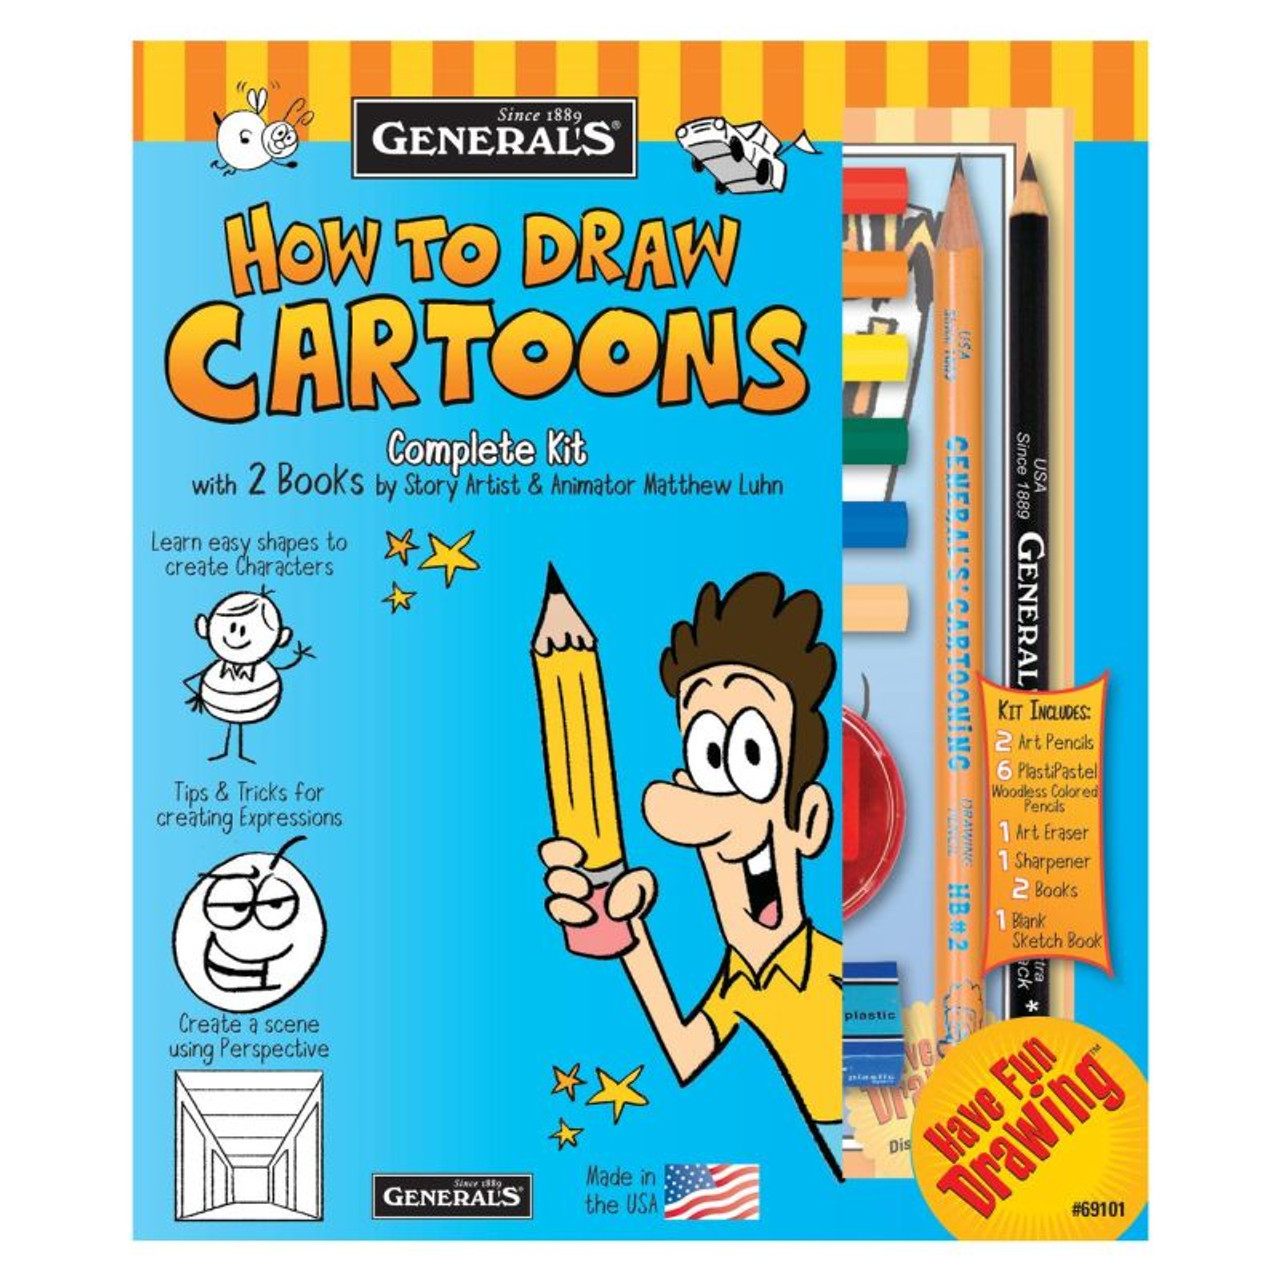 How to Draw Cartoons Kit